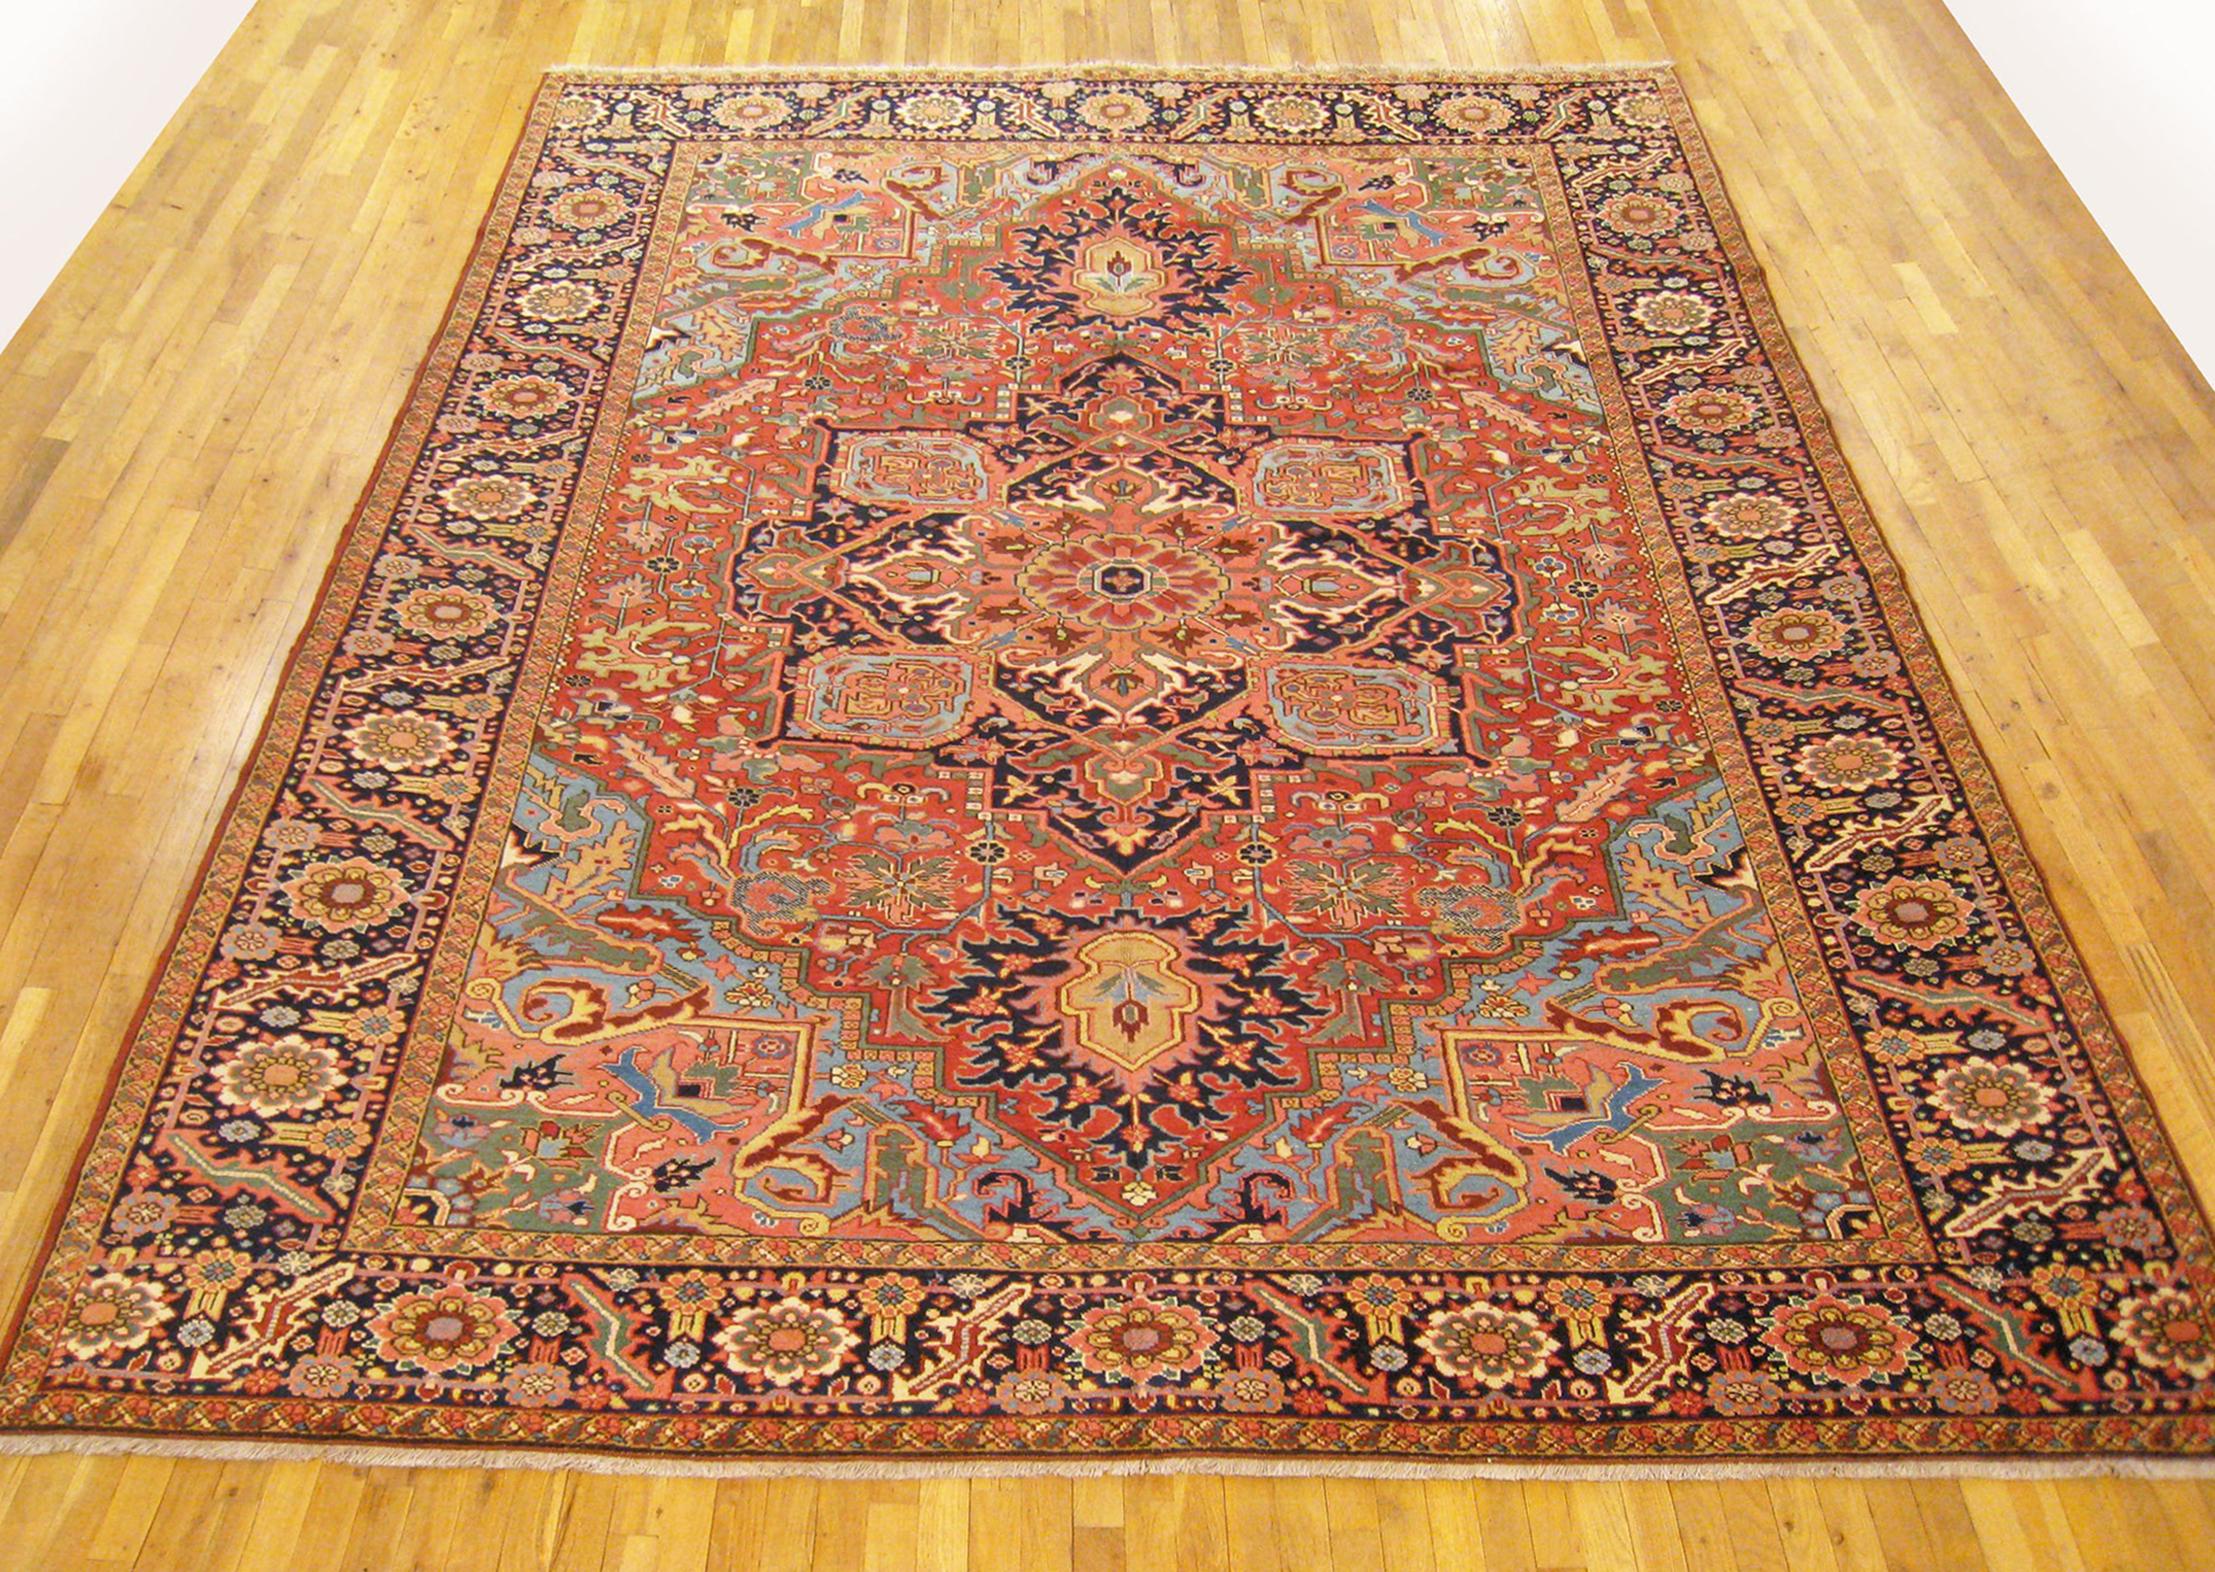 Vintage Persian Heriz Oriental rug, room size.

A vintage Persian Heriz oriental rug, size 12'4